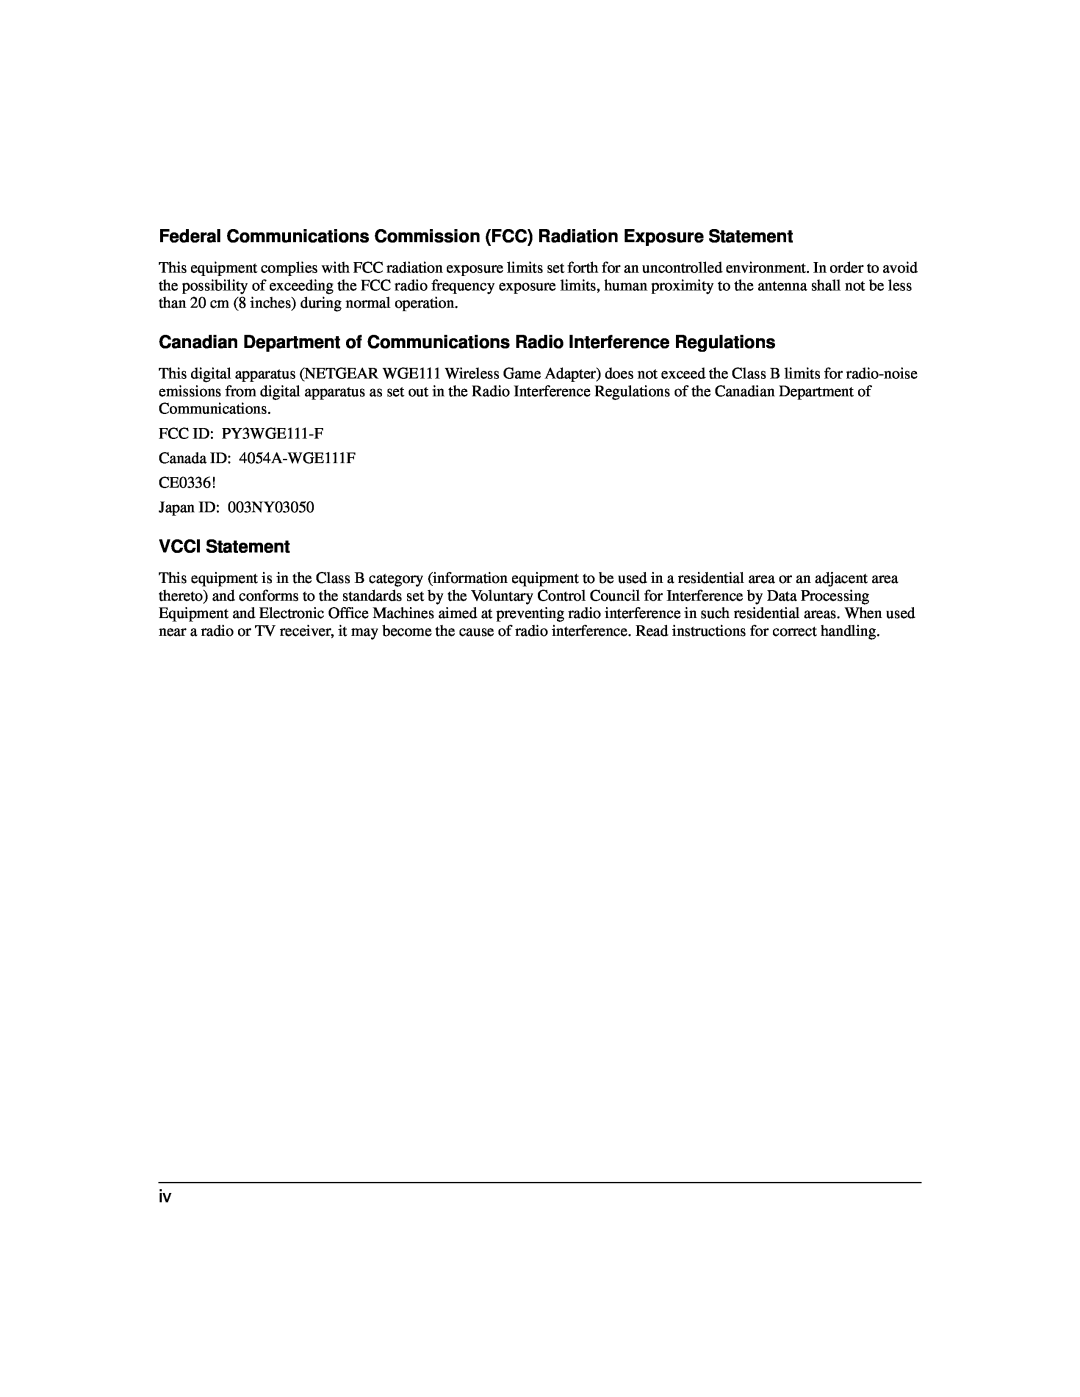 NETGEAR WGE111 user manual Federal Communications Commission FCC Radiation Exposure Statement, VCCI Statement 